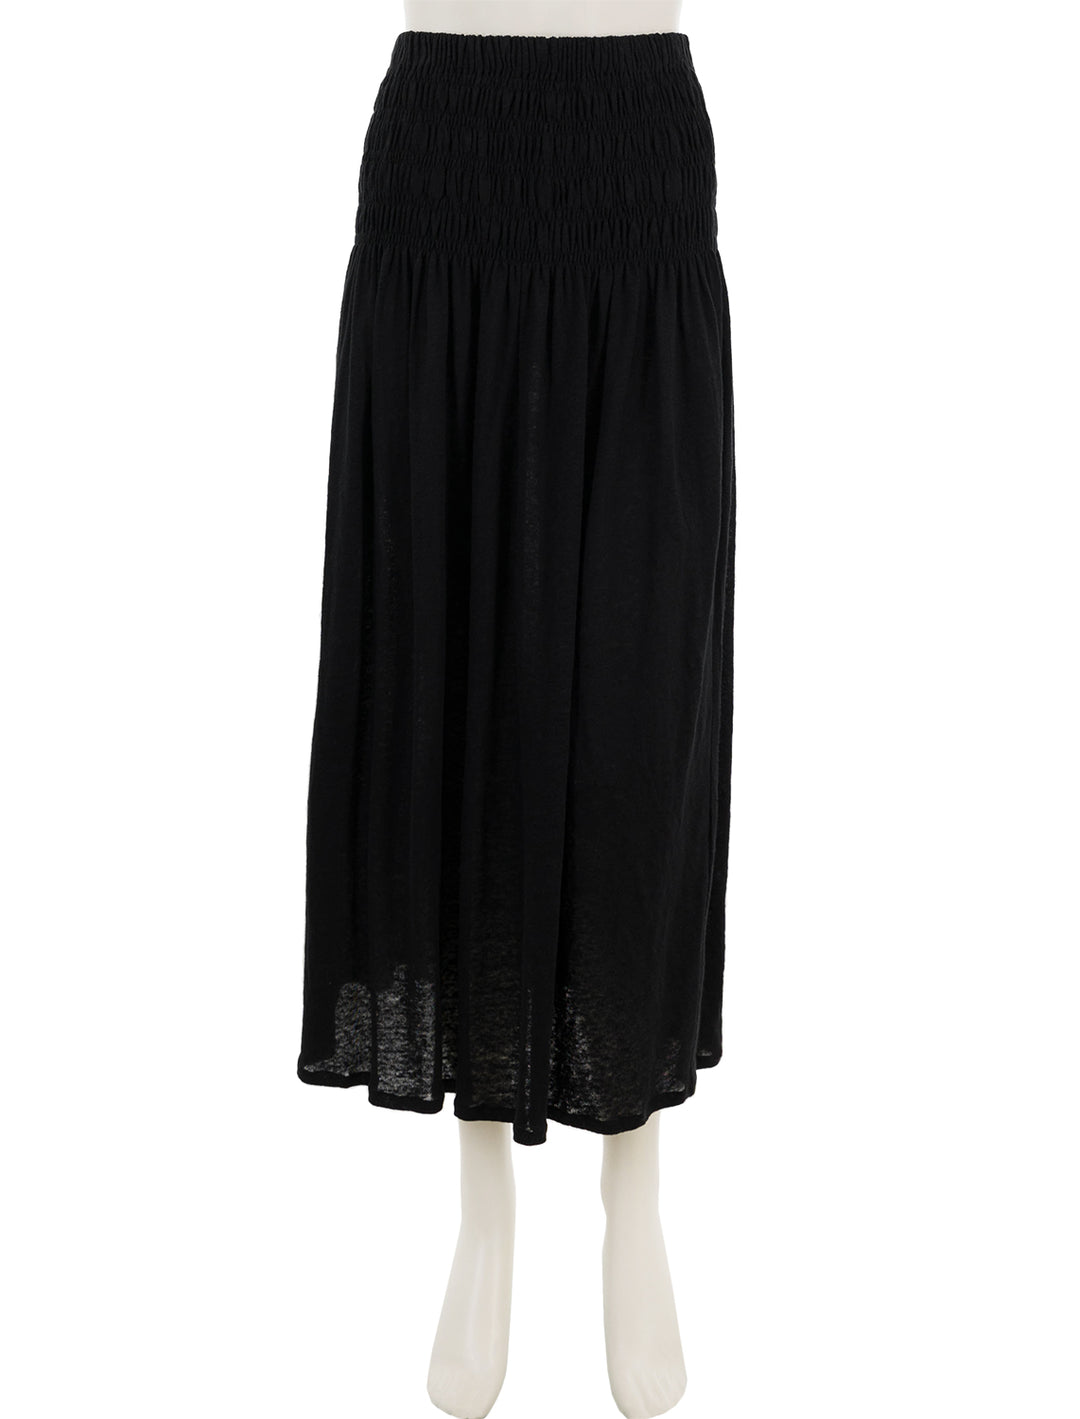 Front view of Vanessa Bruno's tinoa skirt in noir.